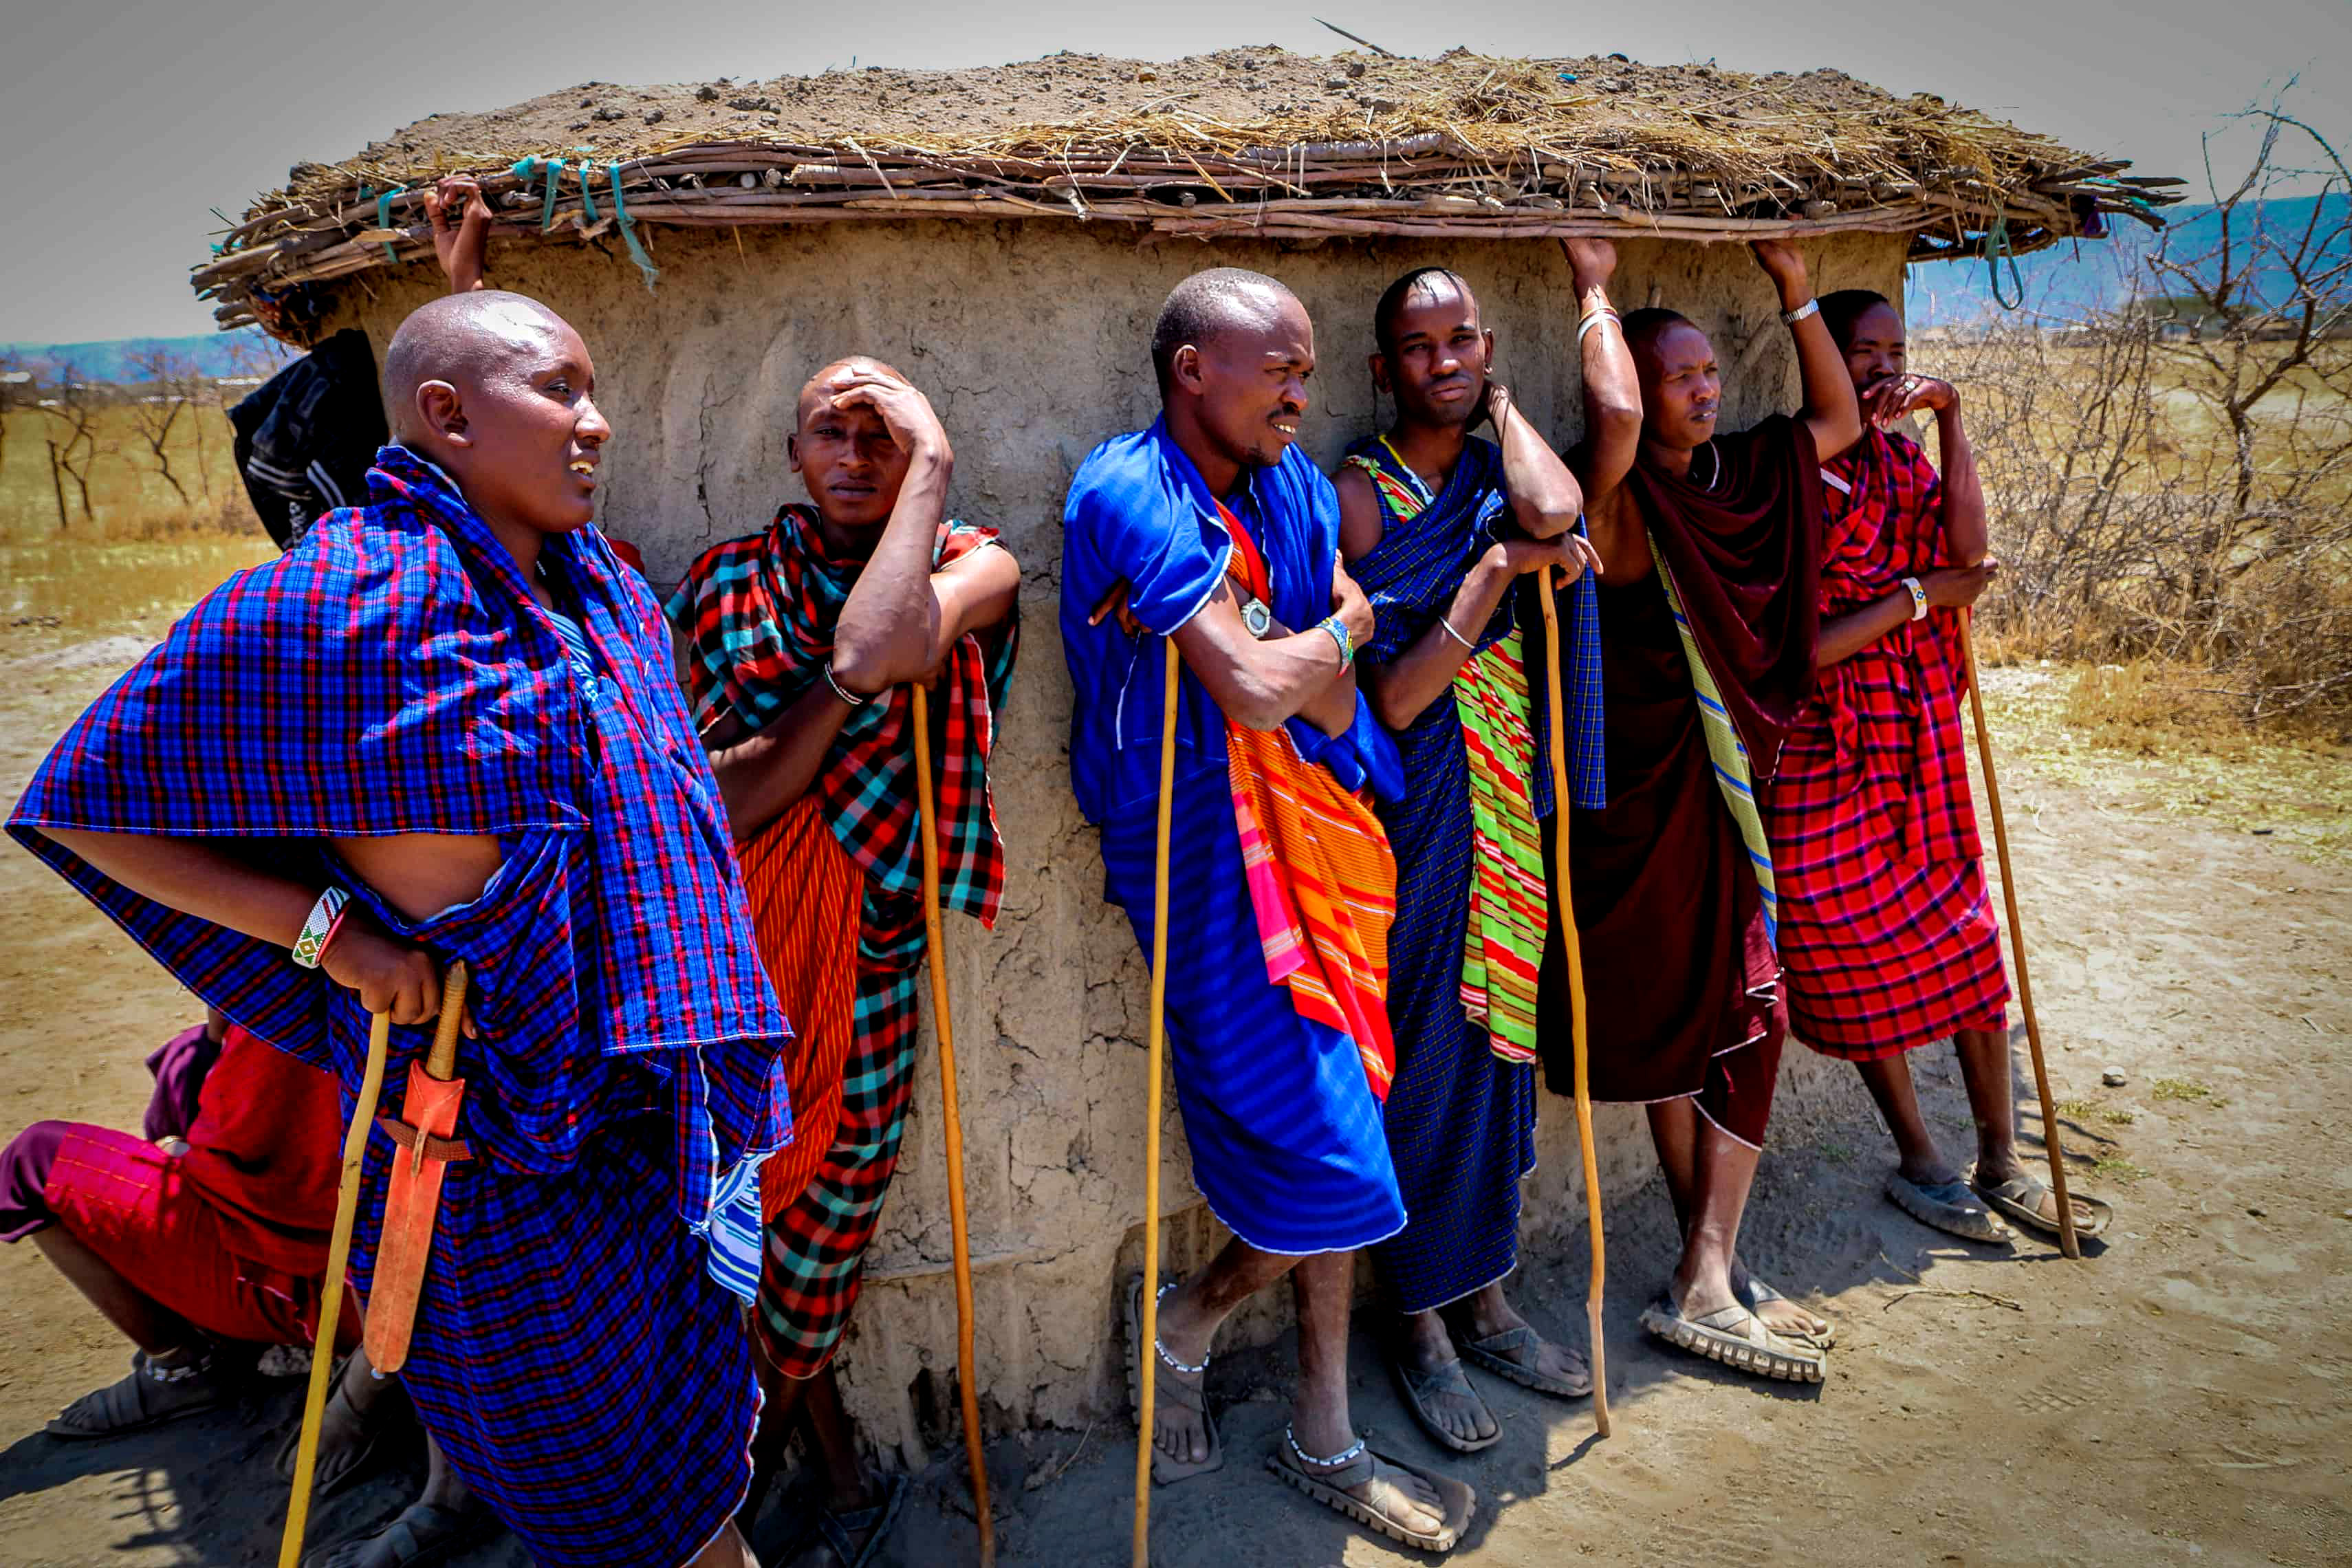 Этнические коллективы. Племя Масаи в Танзании. Масаи племя на Занзибаре. Масаи народы Танзании. Африка Занзибар Масаи.